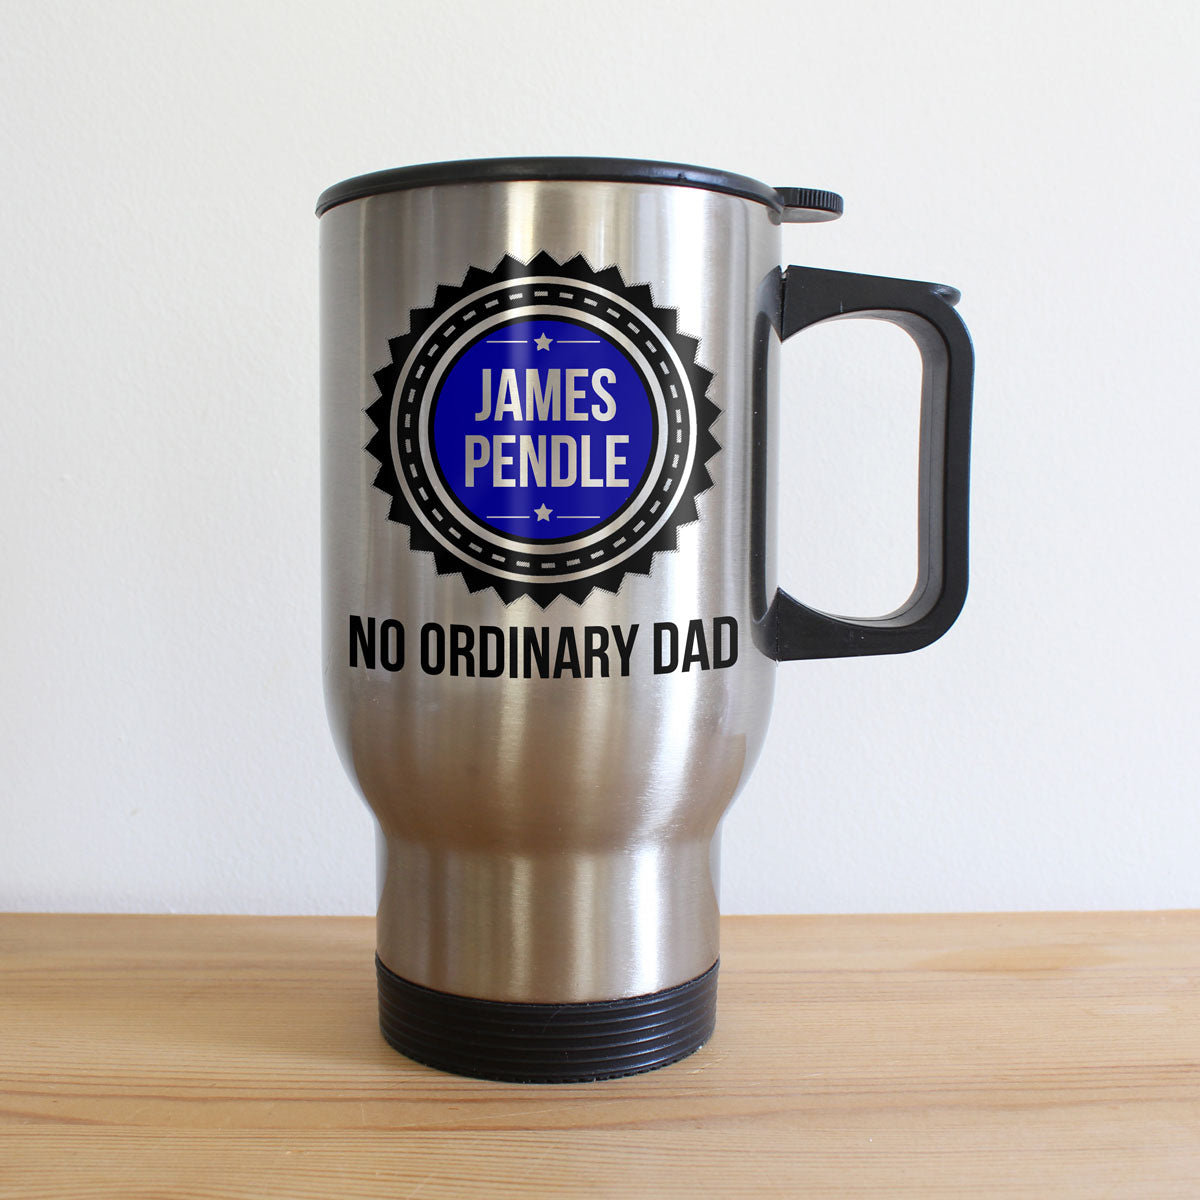 Personalized Travel Mugs - No Ordinary Dad Personalized Travel Mug 